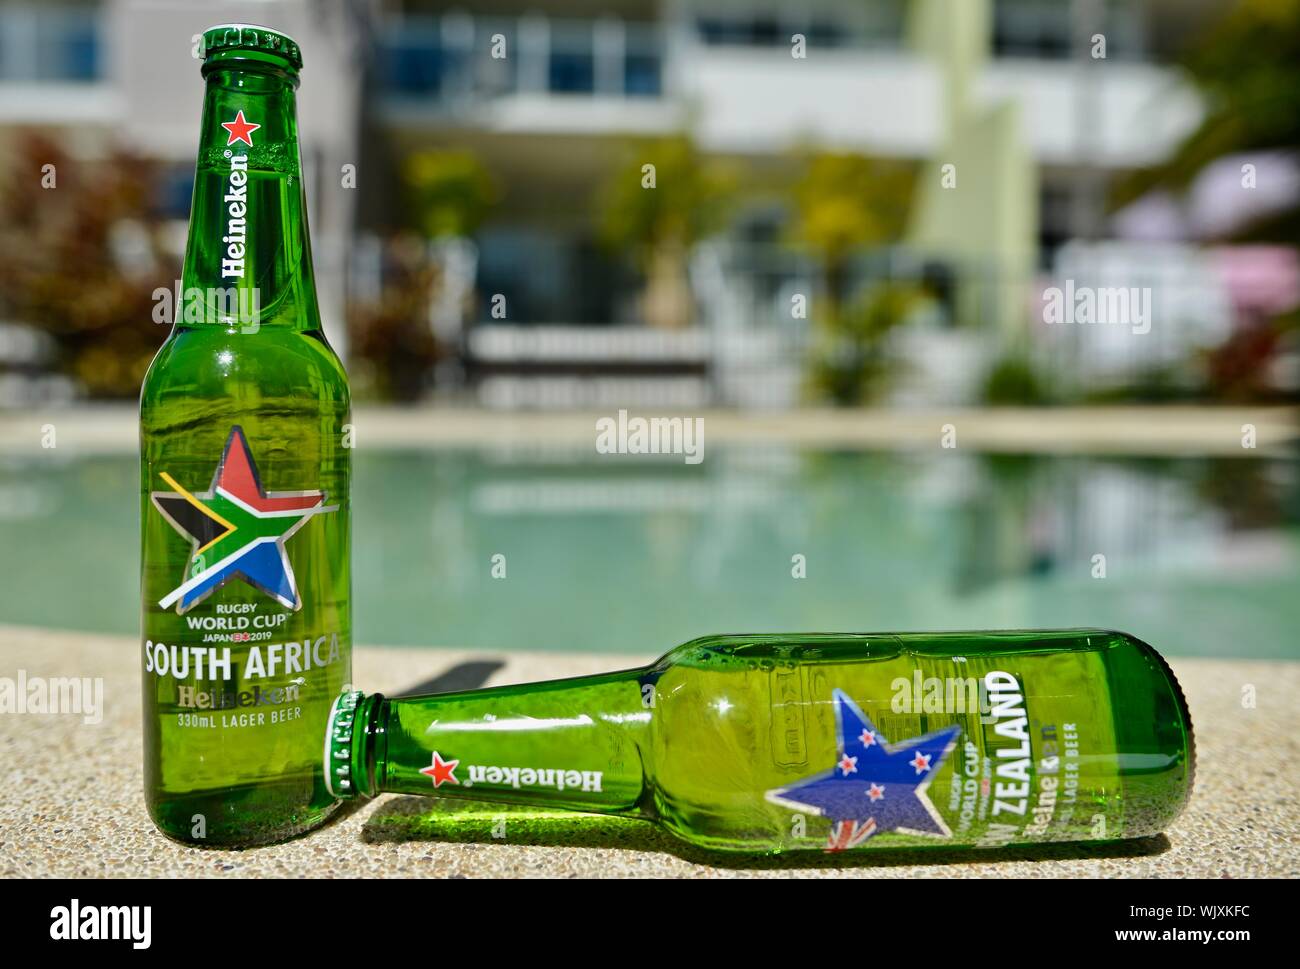 South Africa versus New Zealand, Heineken 2019 Japan Rugby world cup beer bottles Stock Photo